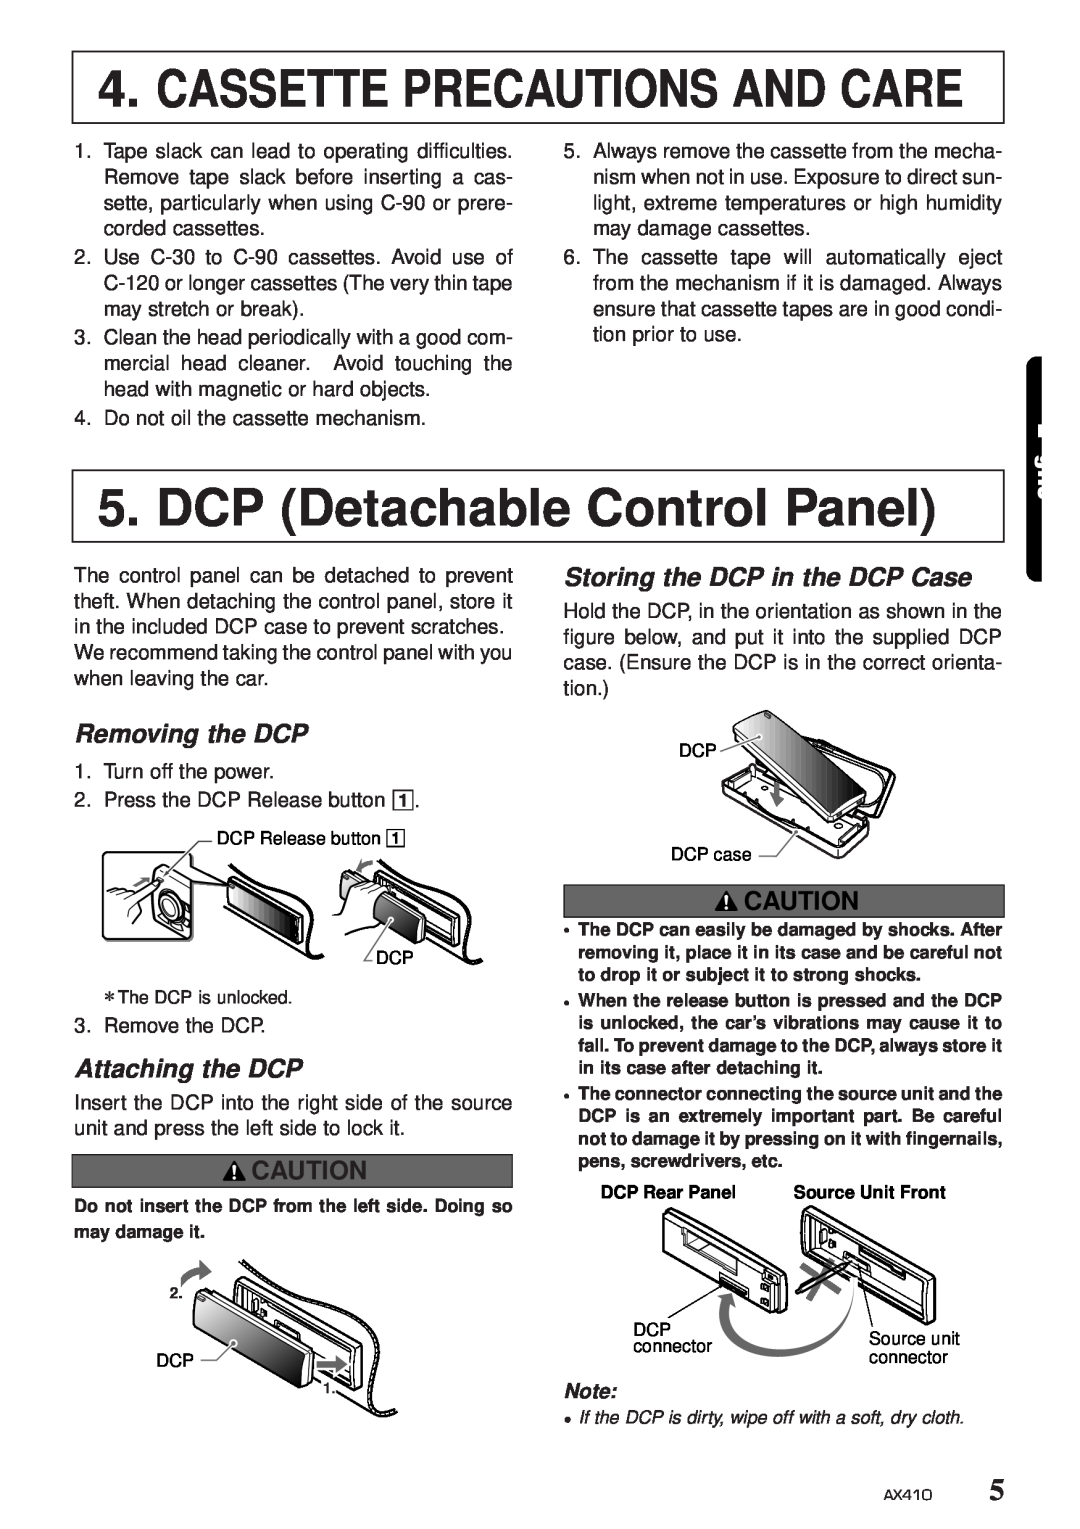 Clarion AX410 DCP Detachable Control Panel, Removing the DCP, Attaching the DCP, Storing the DCP in the DCP Case 